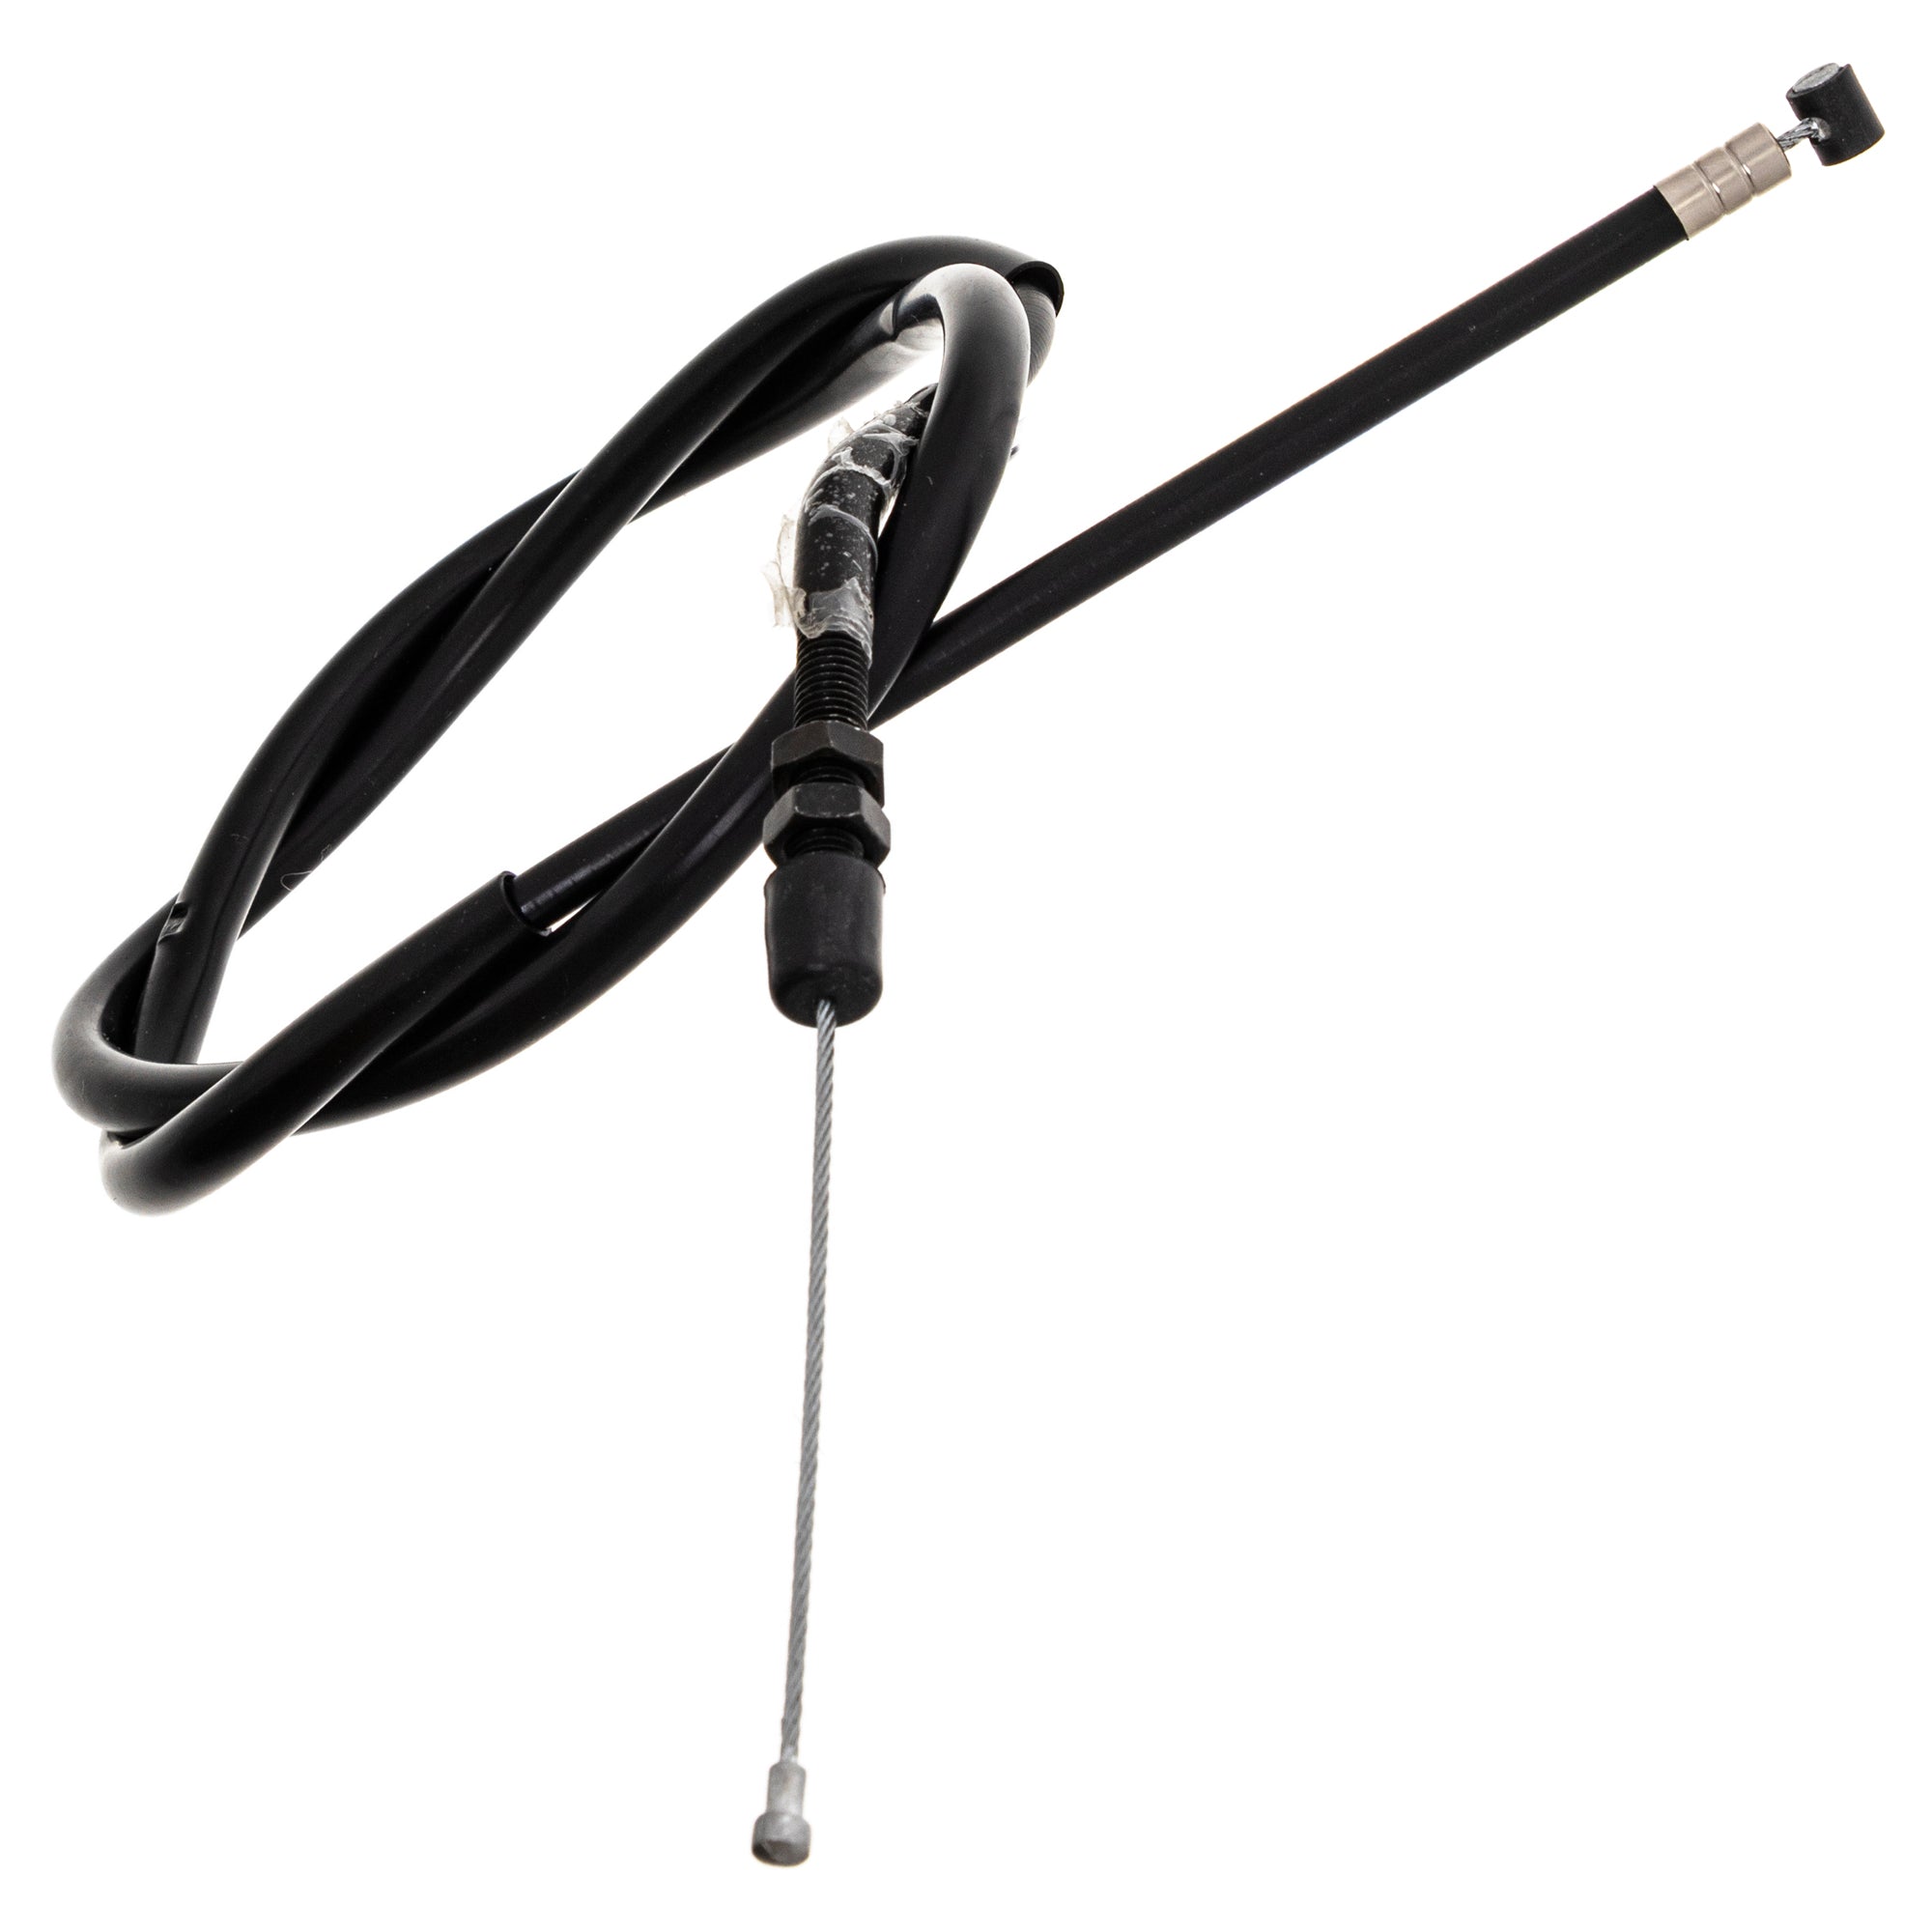 Clutch Cable for Honda Sportrax 400 TRX400EX 22870-HN1-A40 ATV